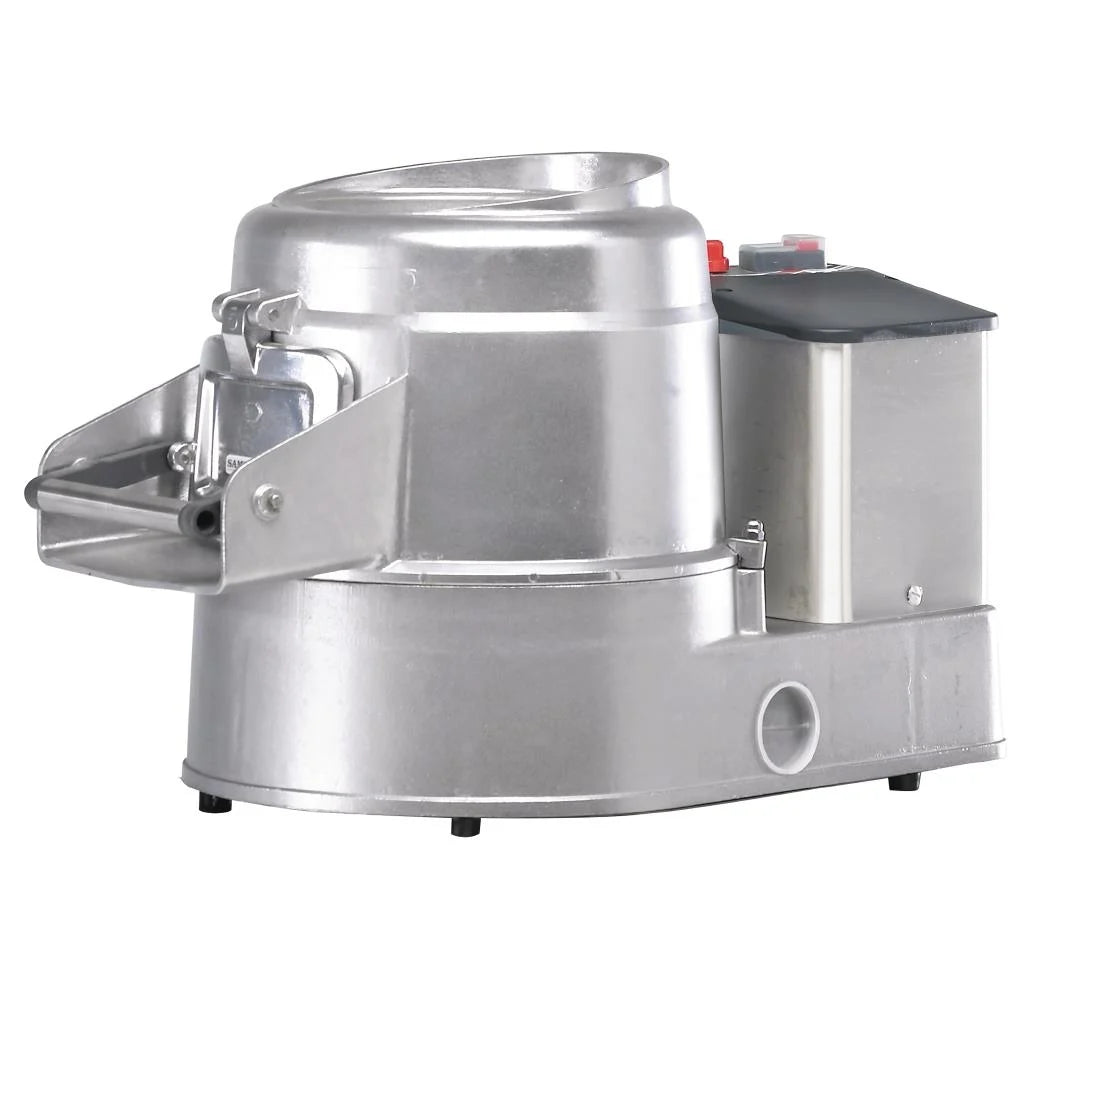 CP723-3P Sammic Potato Peeler PP6 3 Phase JD Catering Equipment Solutions Ltd